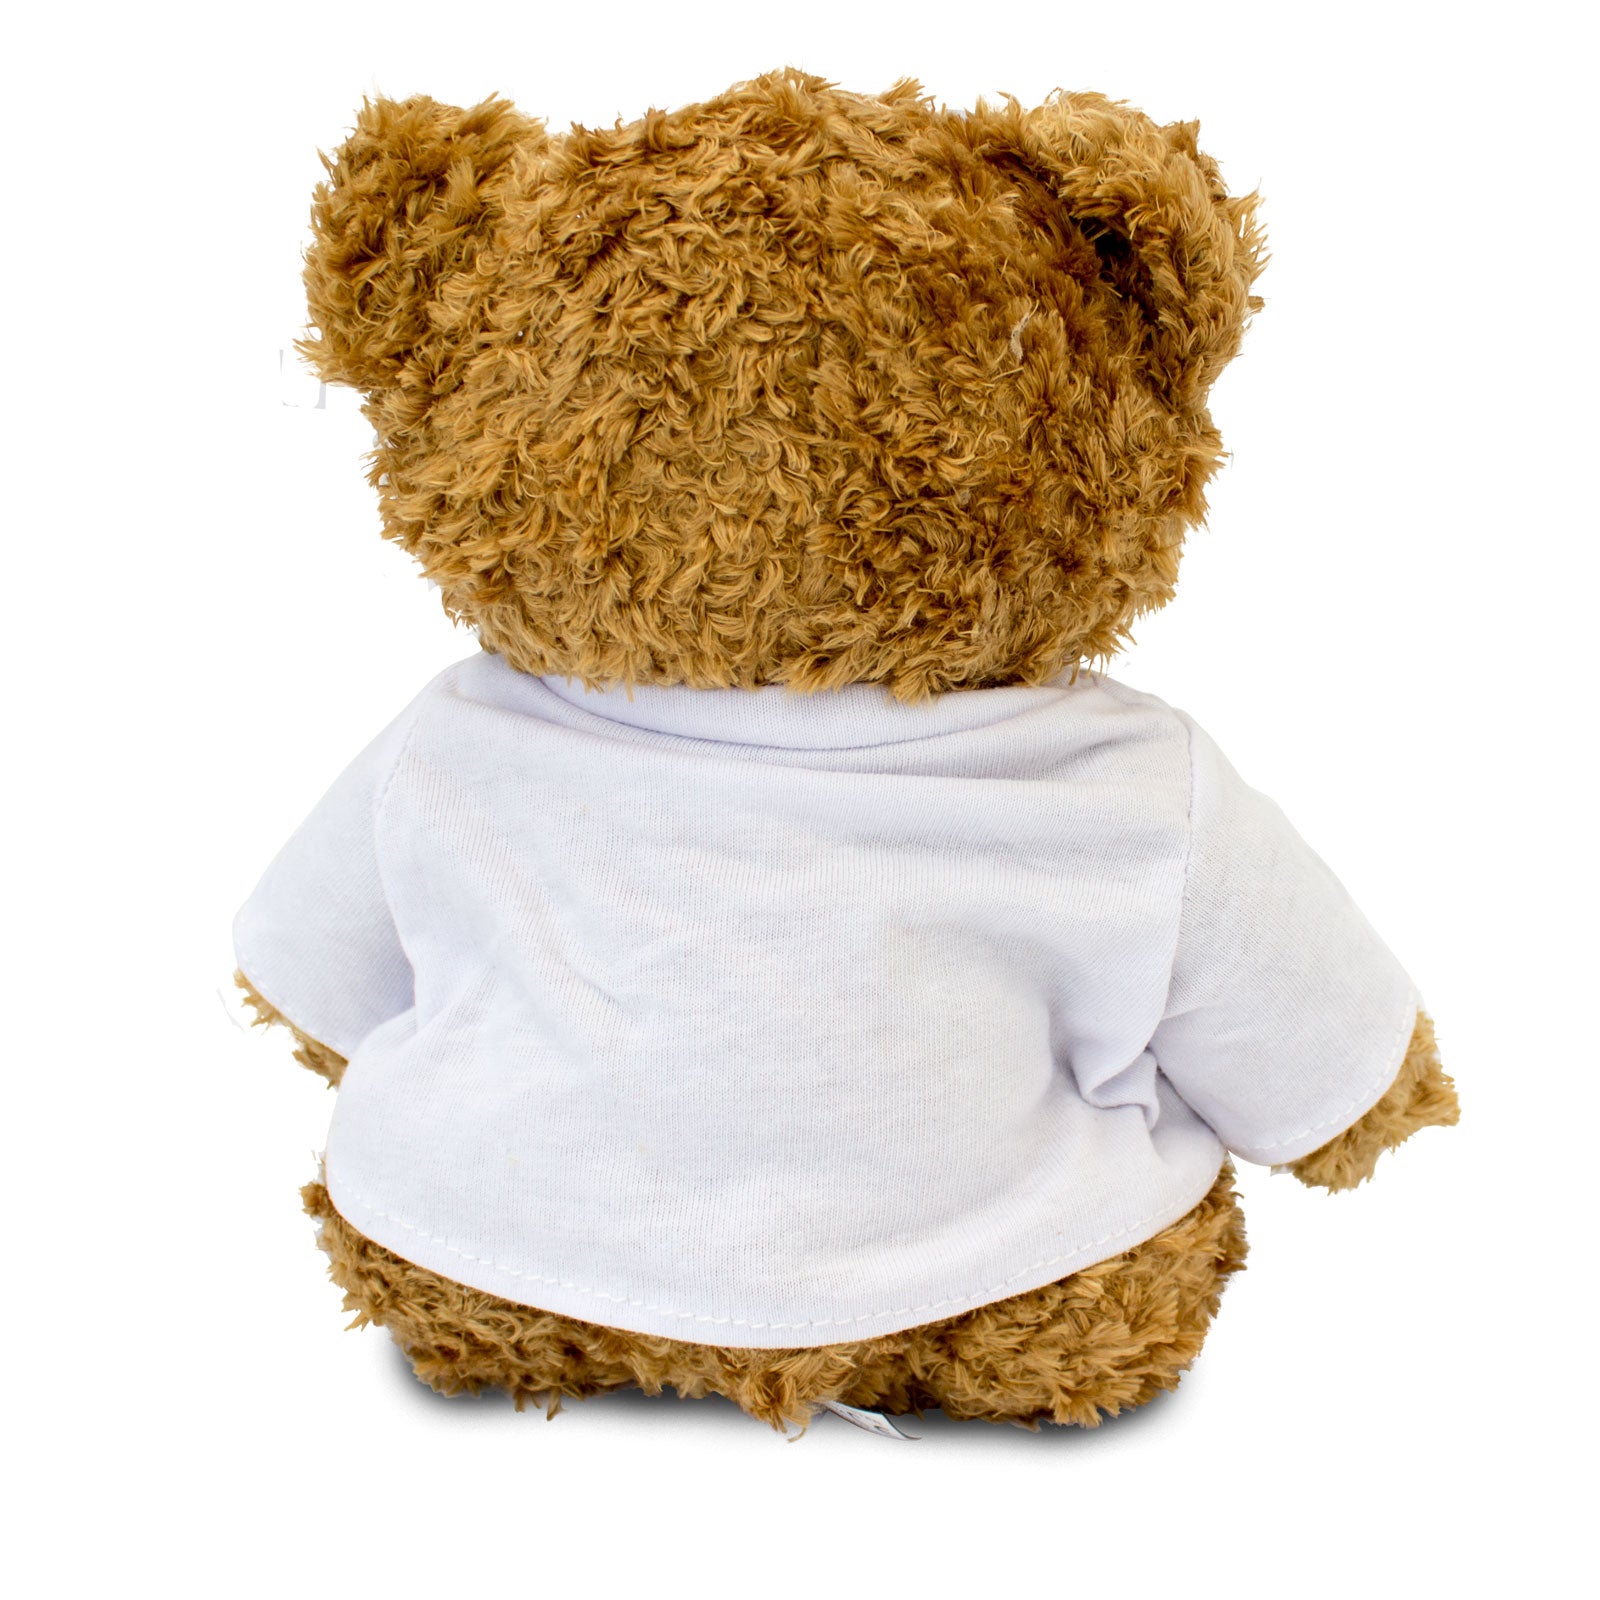 Get Well Soon Dimitri - Teddy Bear